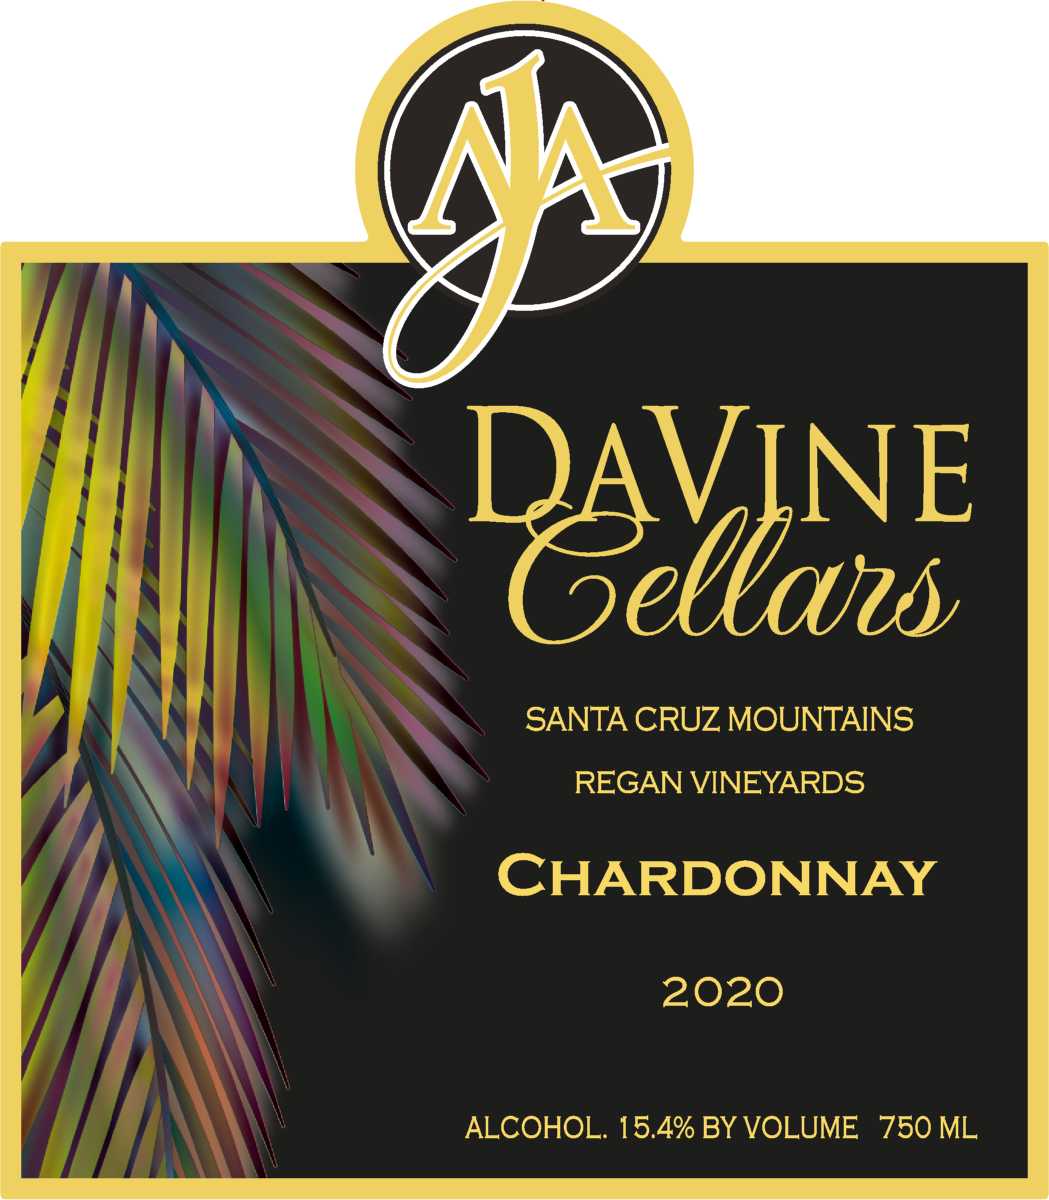 Product Image for 2020 Santa Cruz Mountains Chardonnay "Ono"